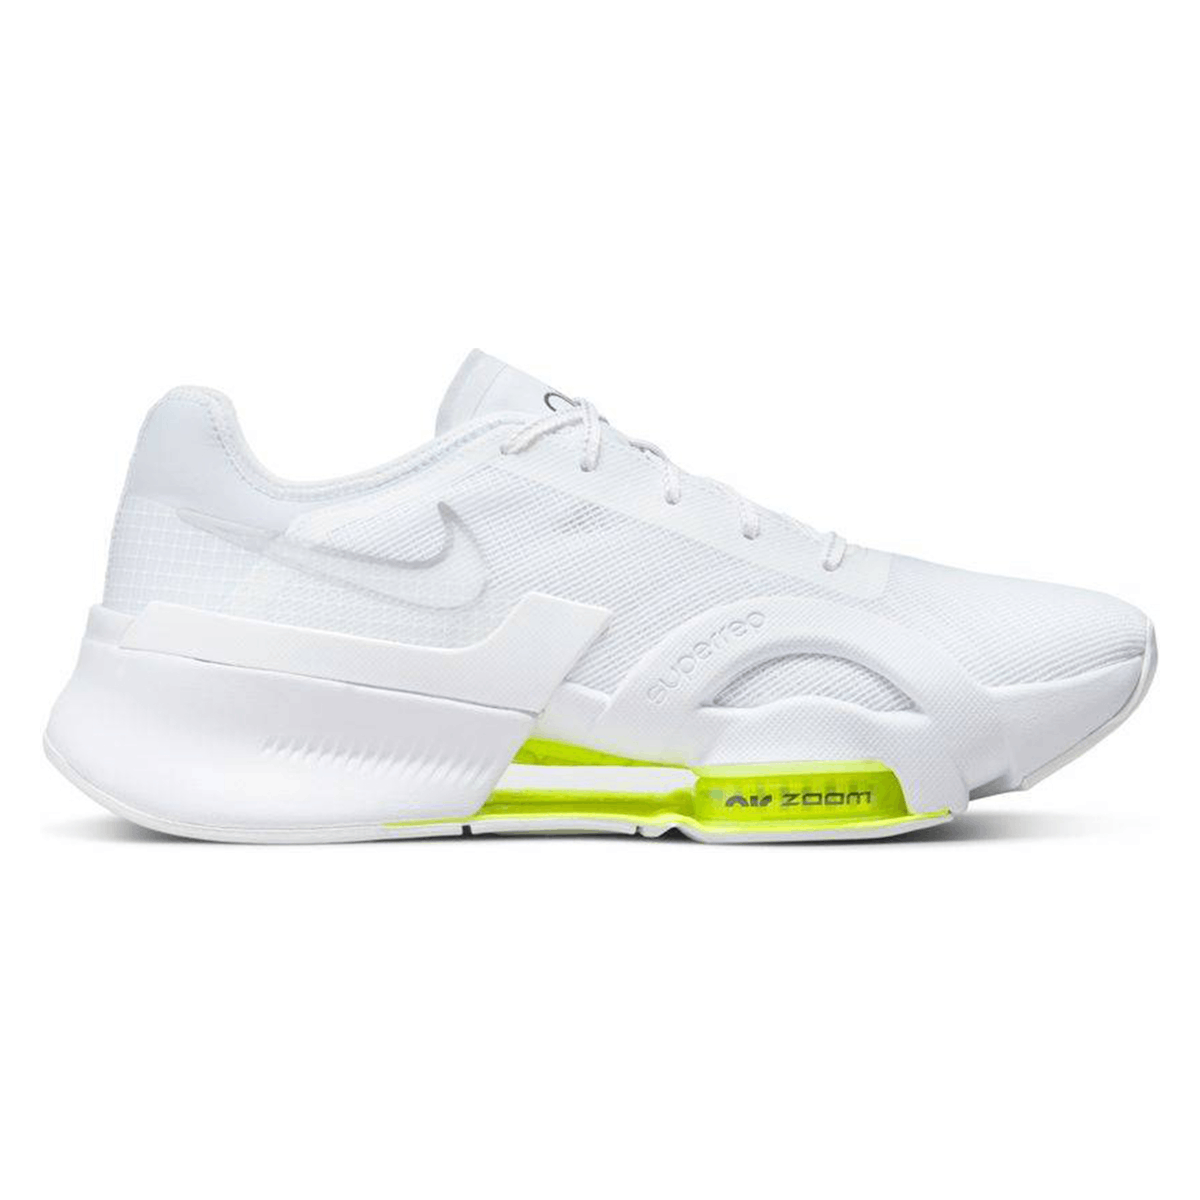 Nike Air Zoom SuperRep 3 White Volt